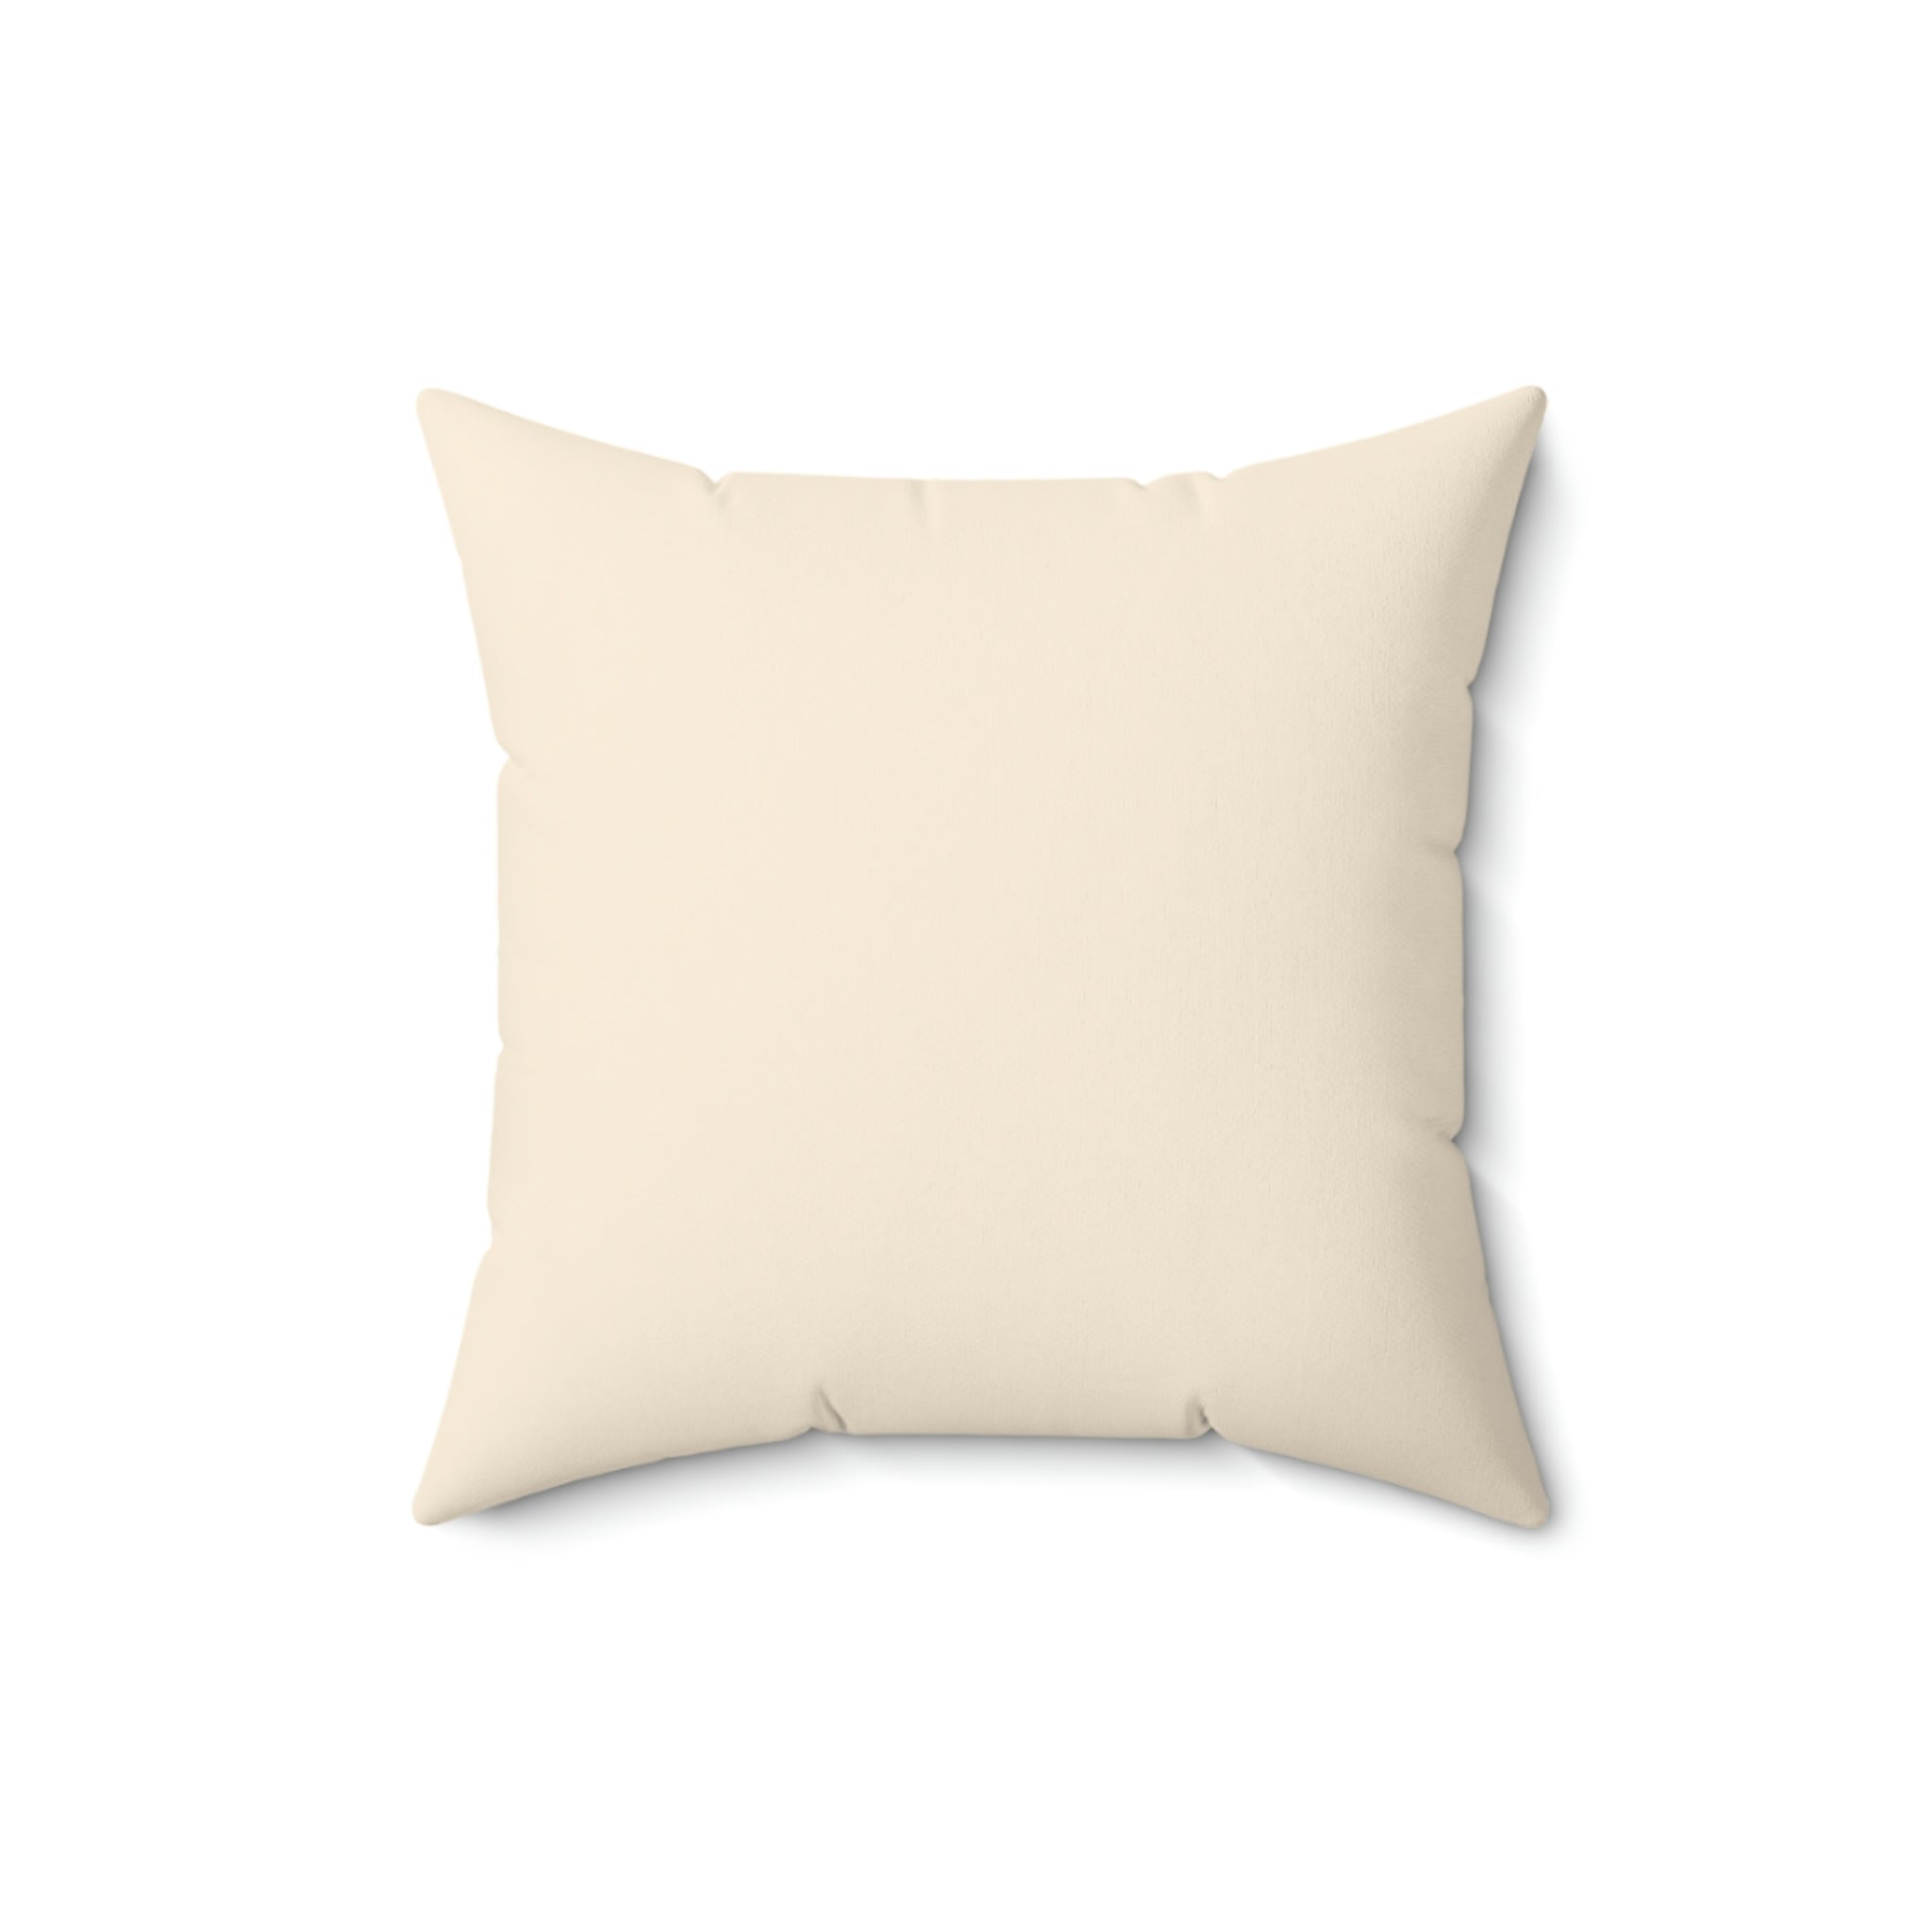 Spun Polyester Pillow Jack Pattern off white